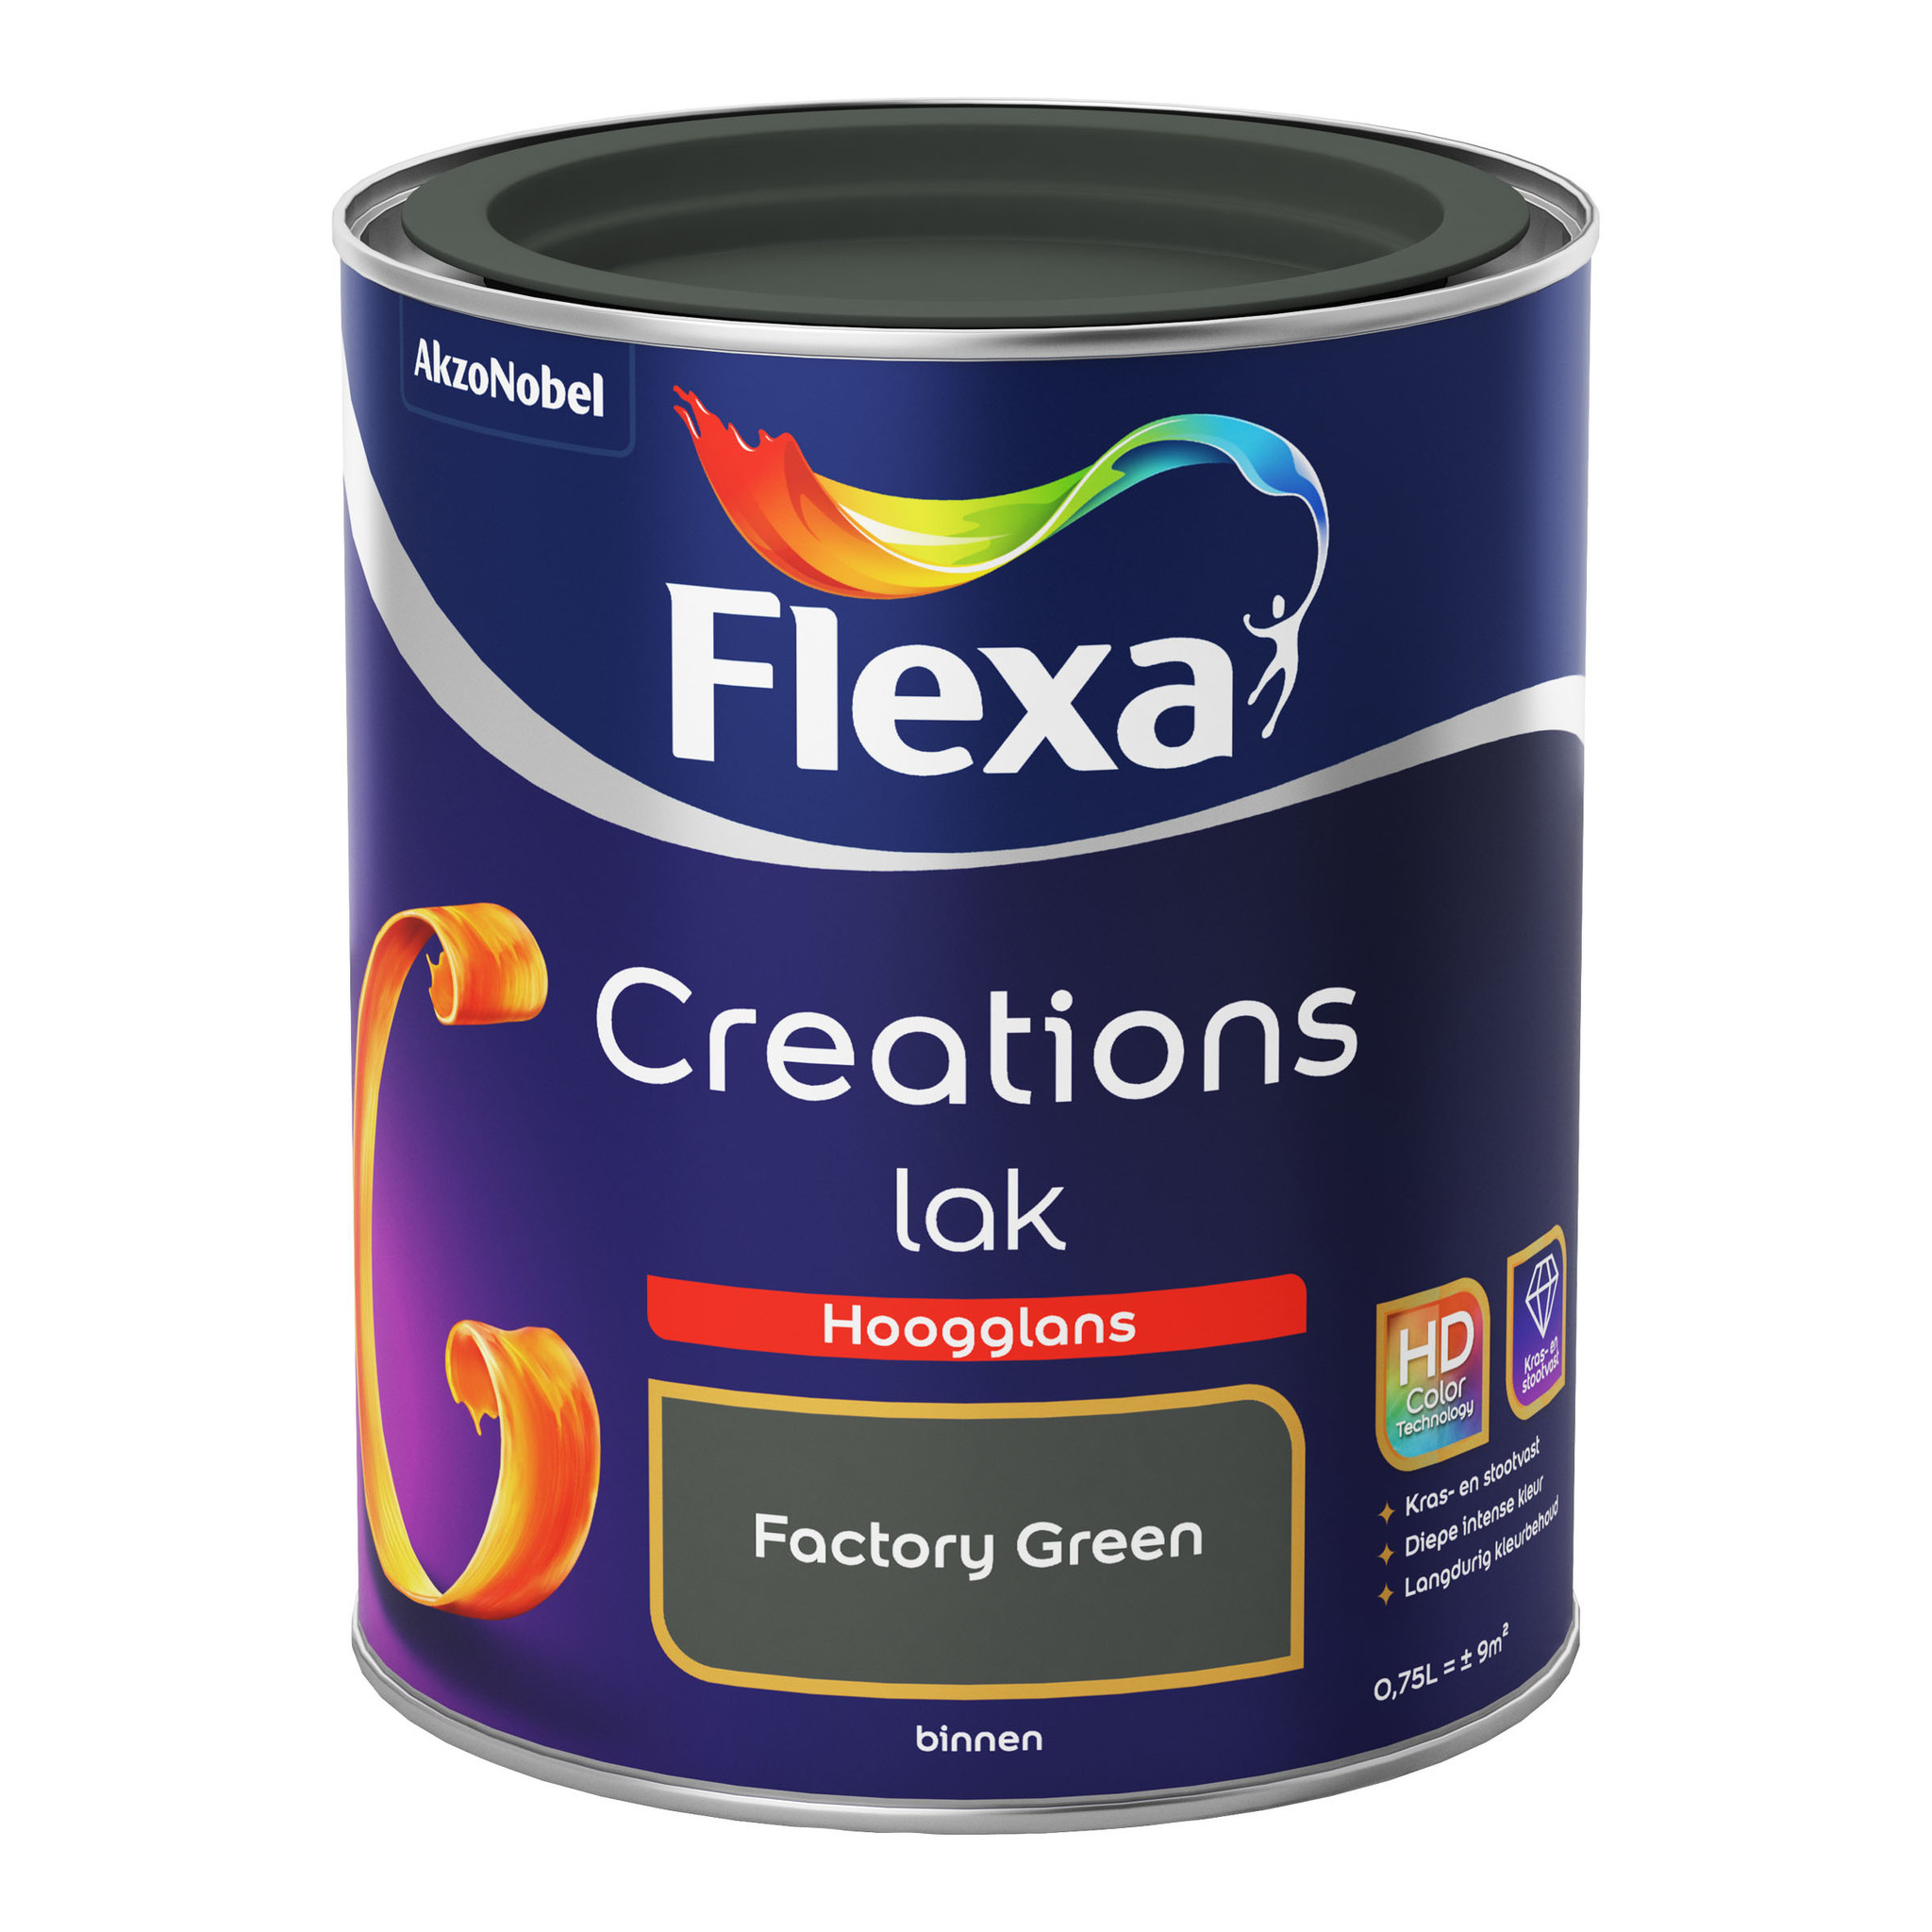 Flexa Creations Lak Hoogglans - Factory Green